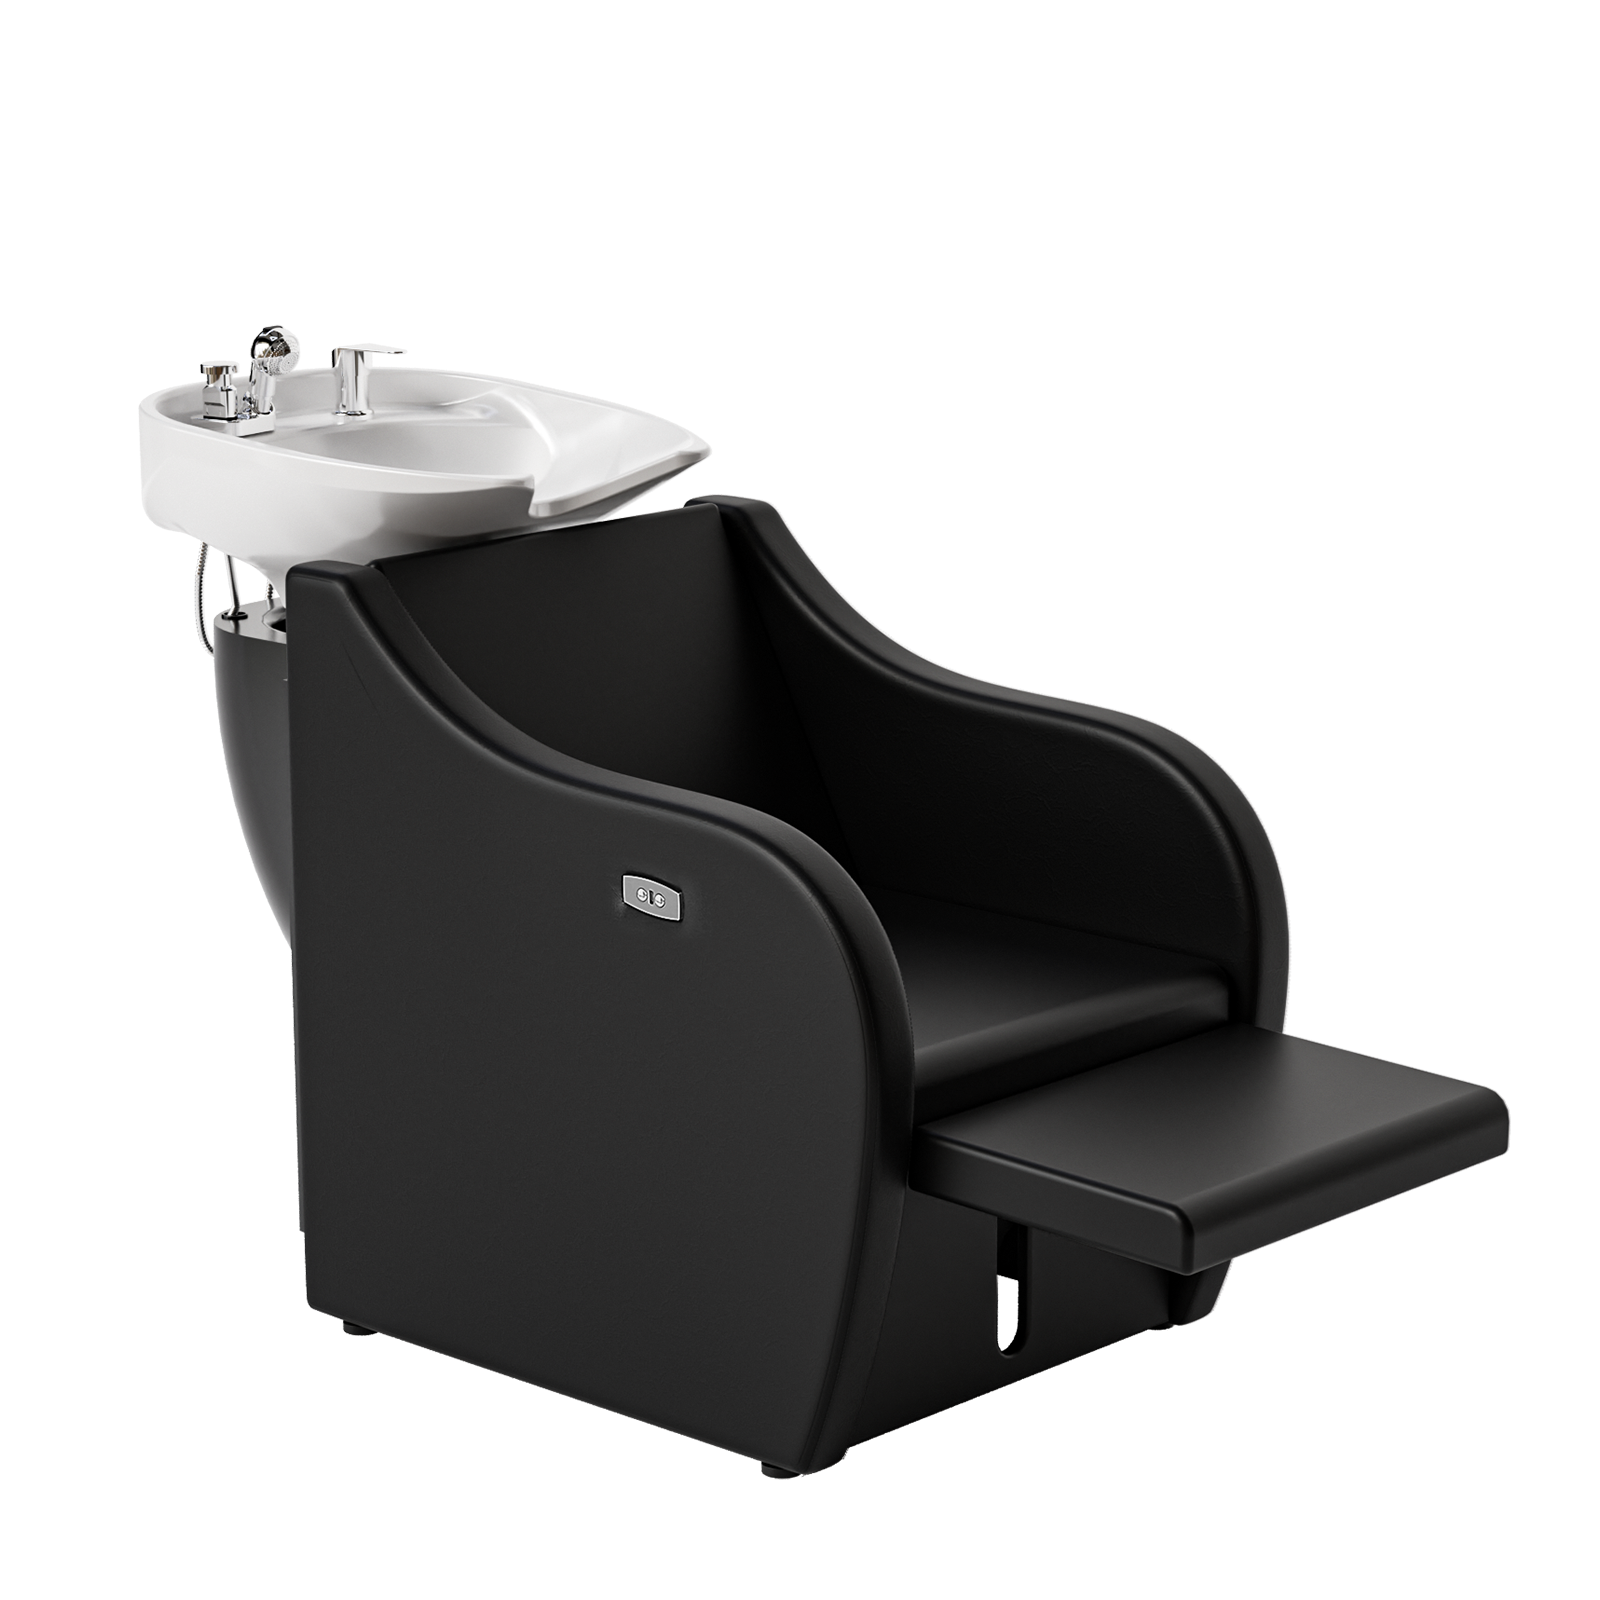 OmySalon Shampoo Sink for Salon, Hair Wash Chair with Electric Footrest